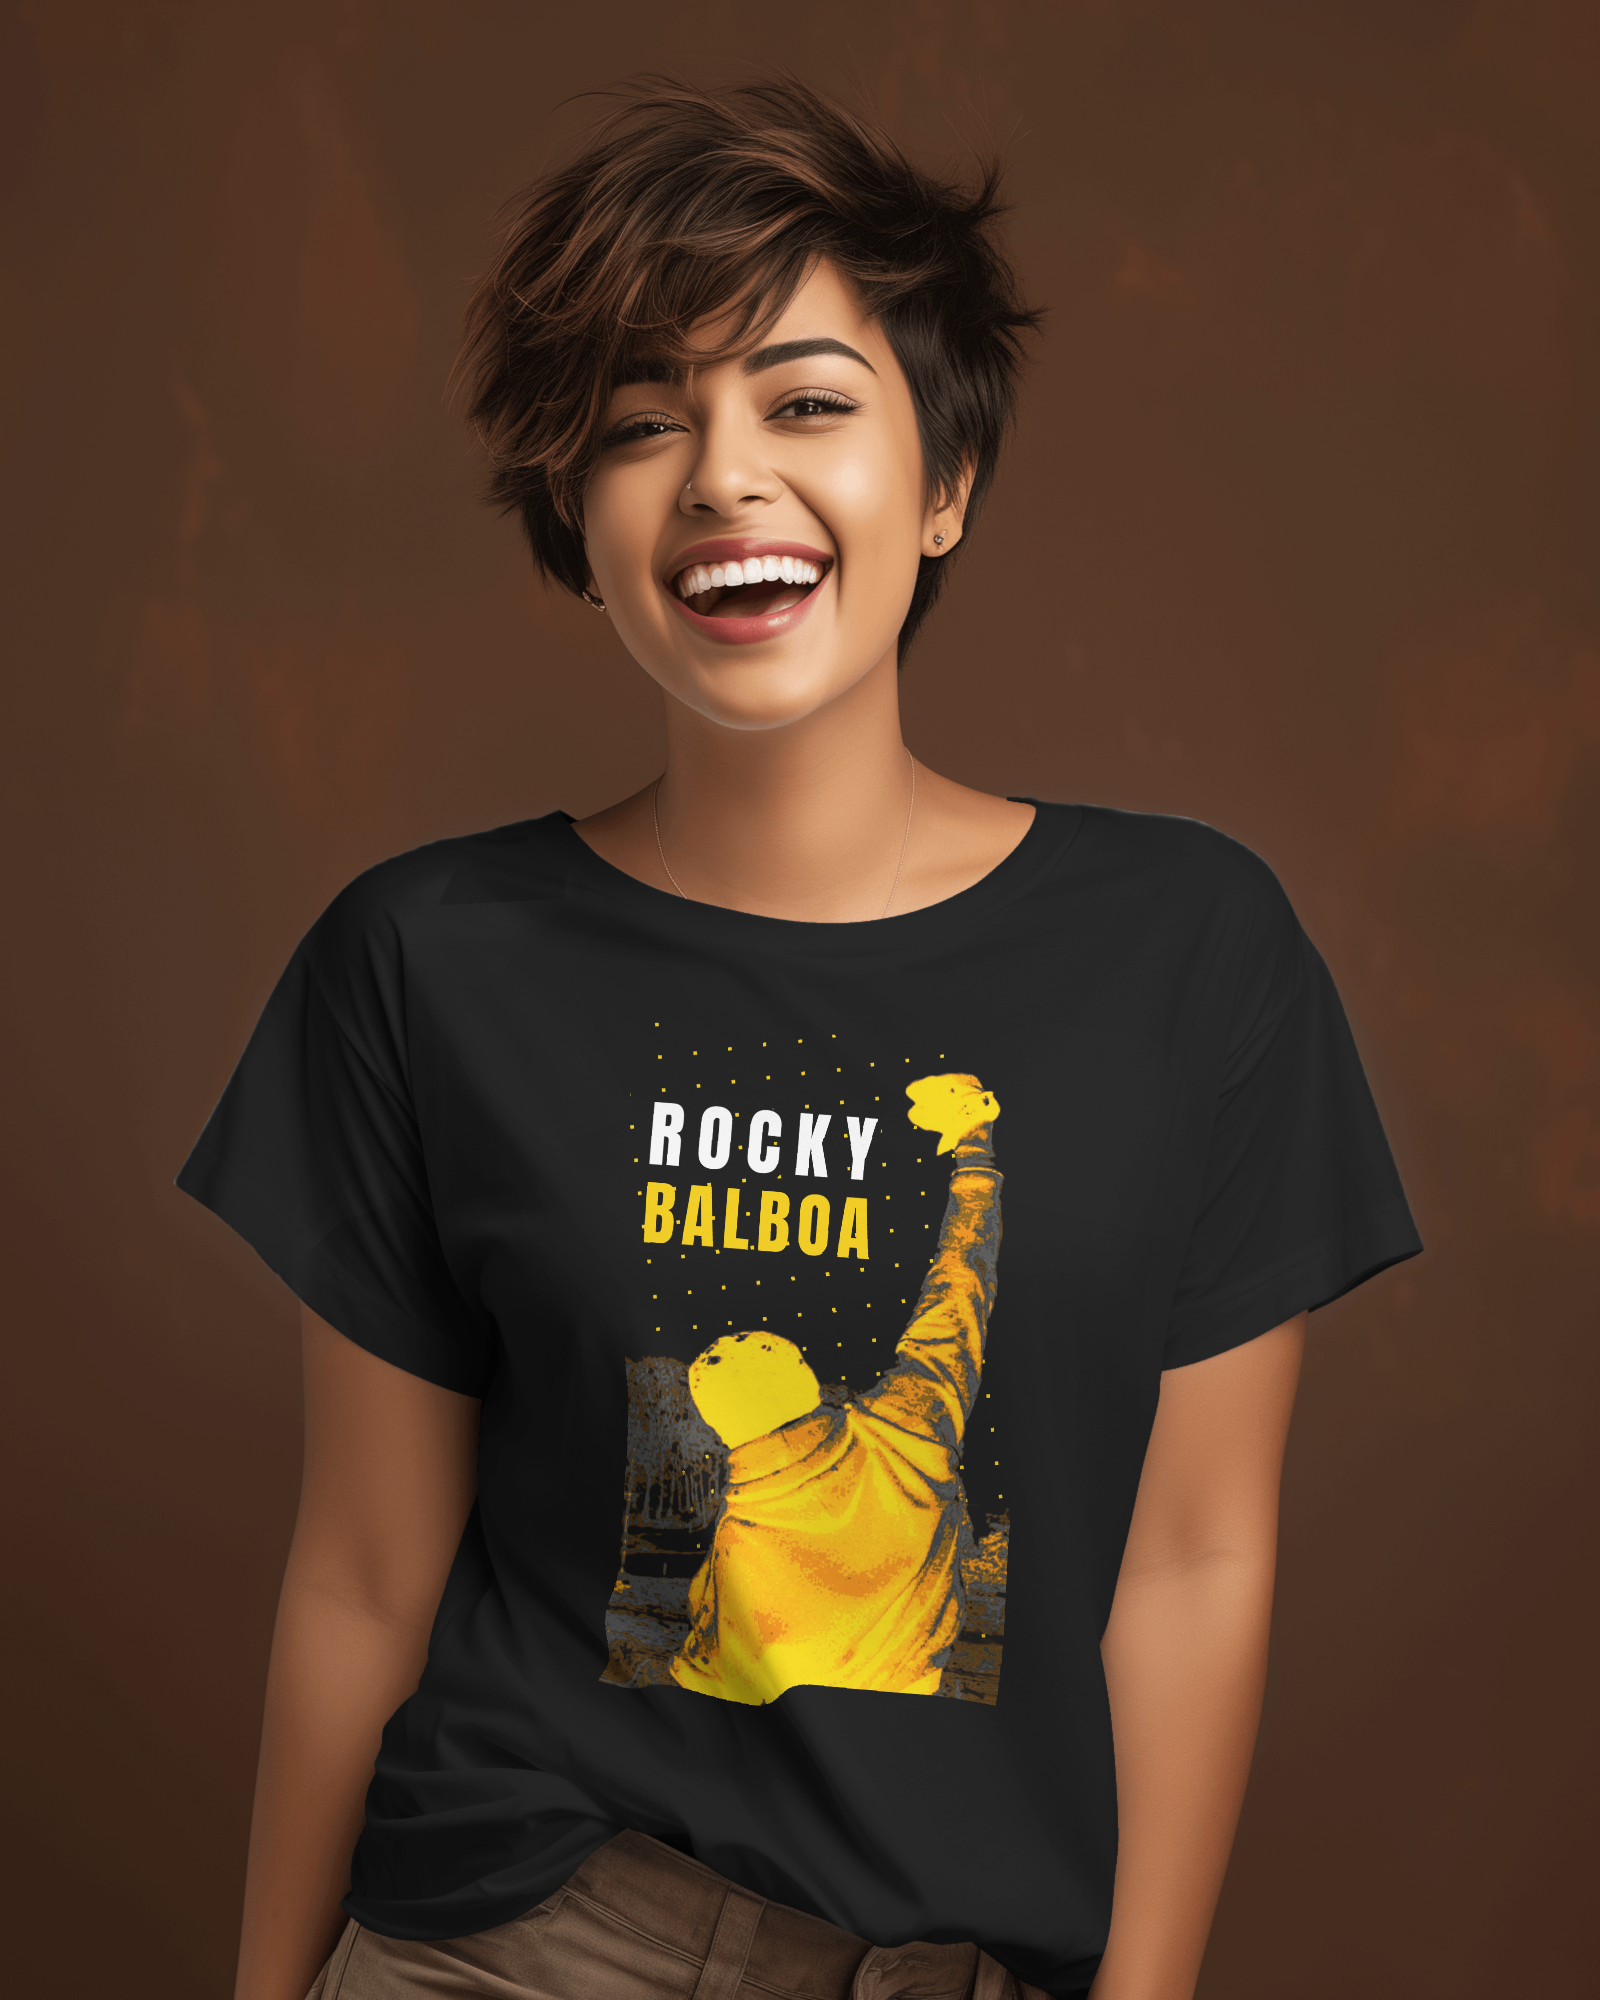 "ROCKY BALBOA" Poster Printed Tshirt - Black